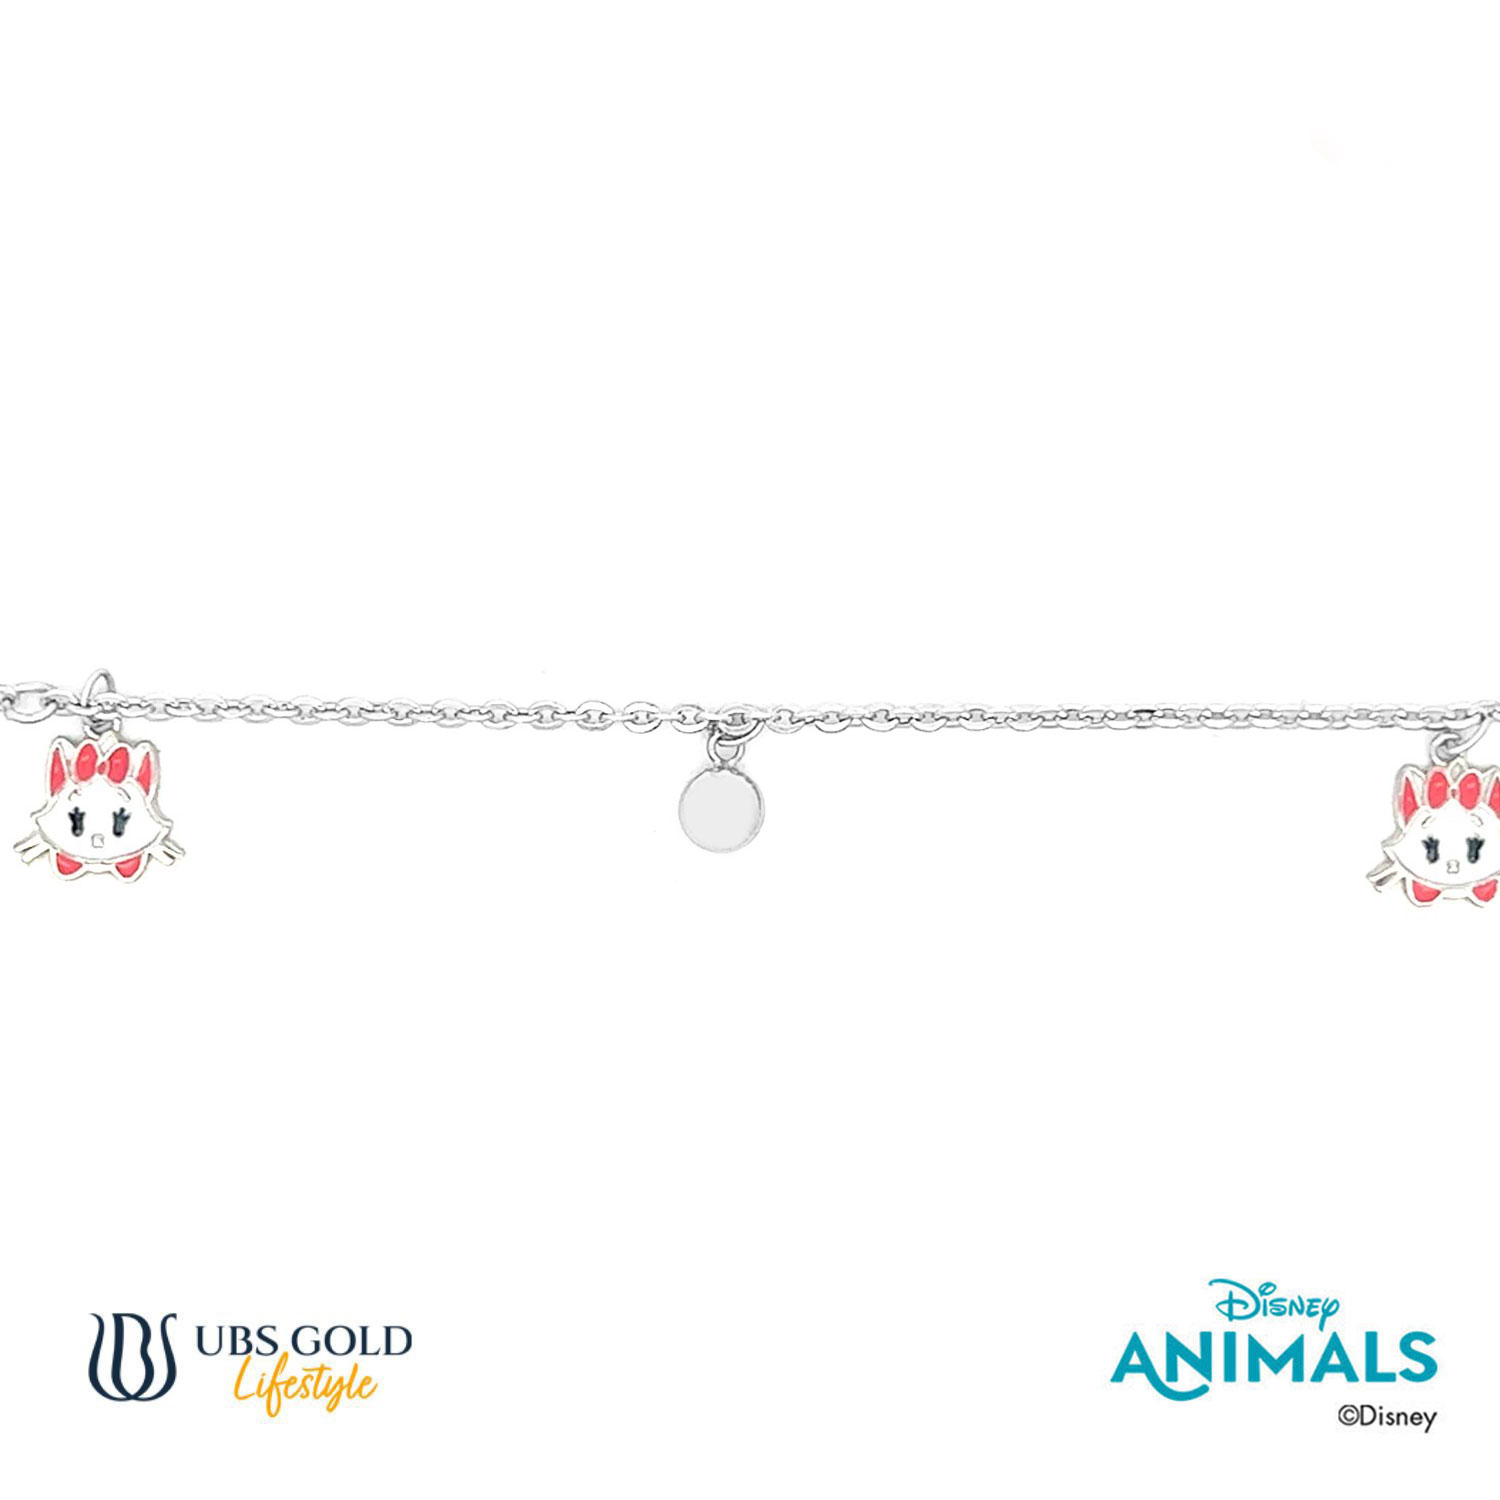 UBS Gold Gelang Emas Anak Disney Animals - Hgy0094 - 17K